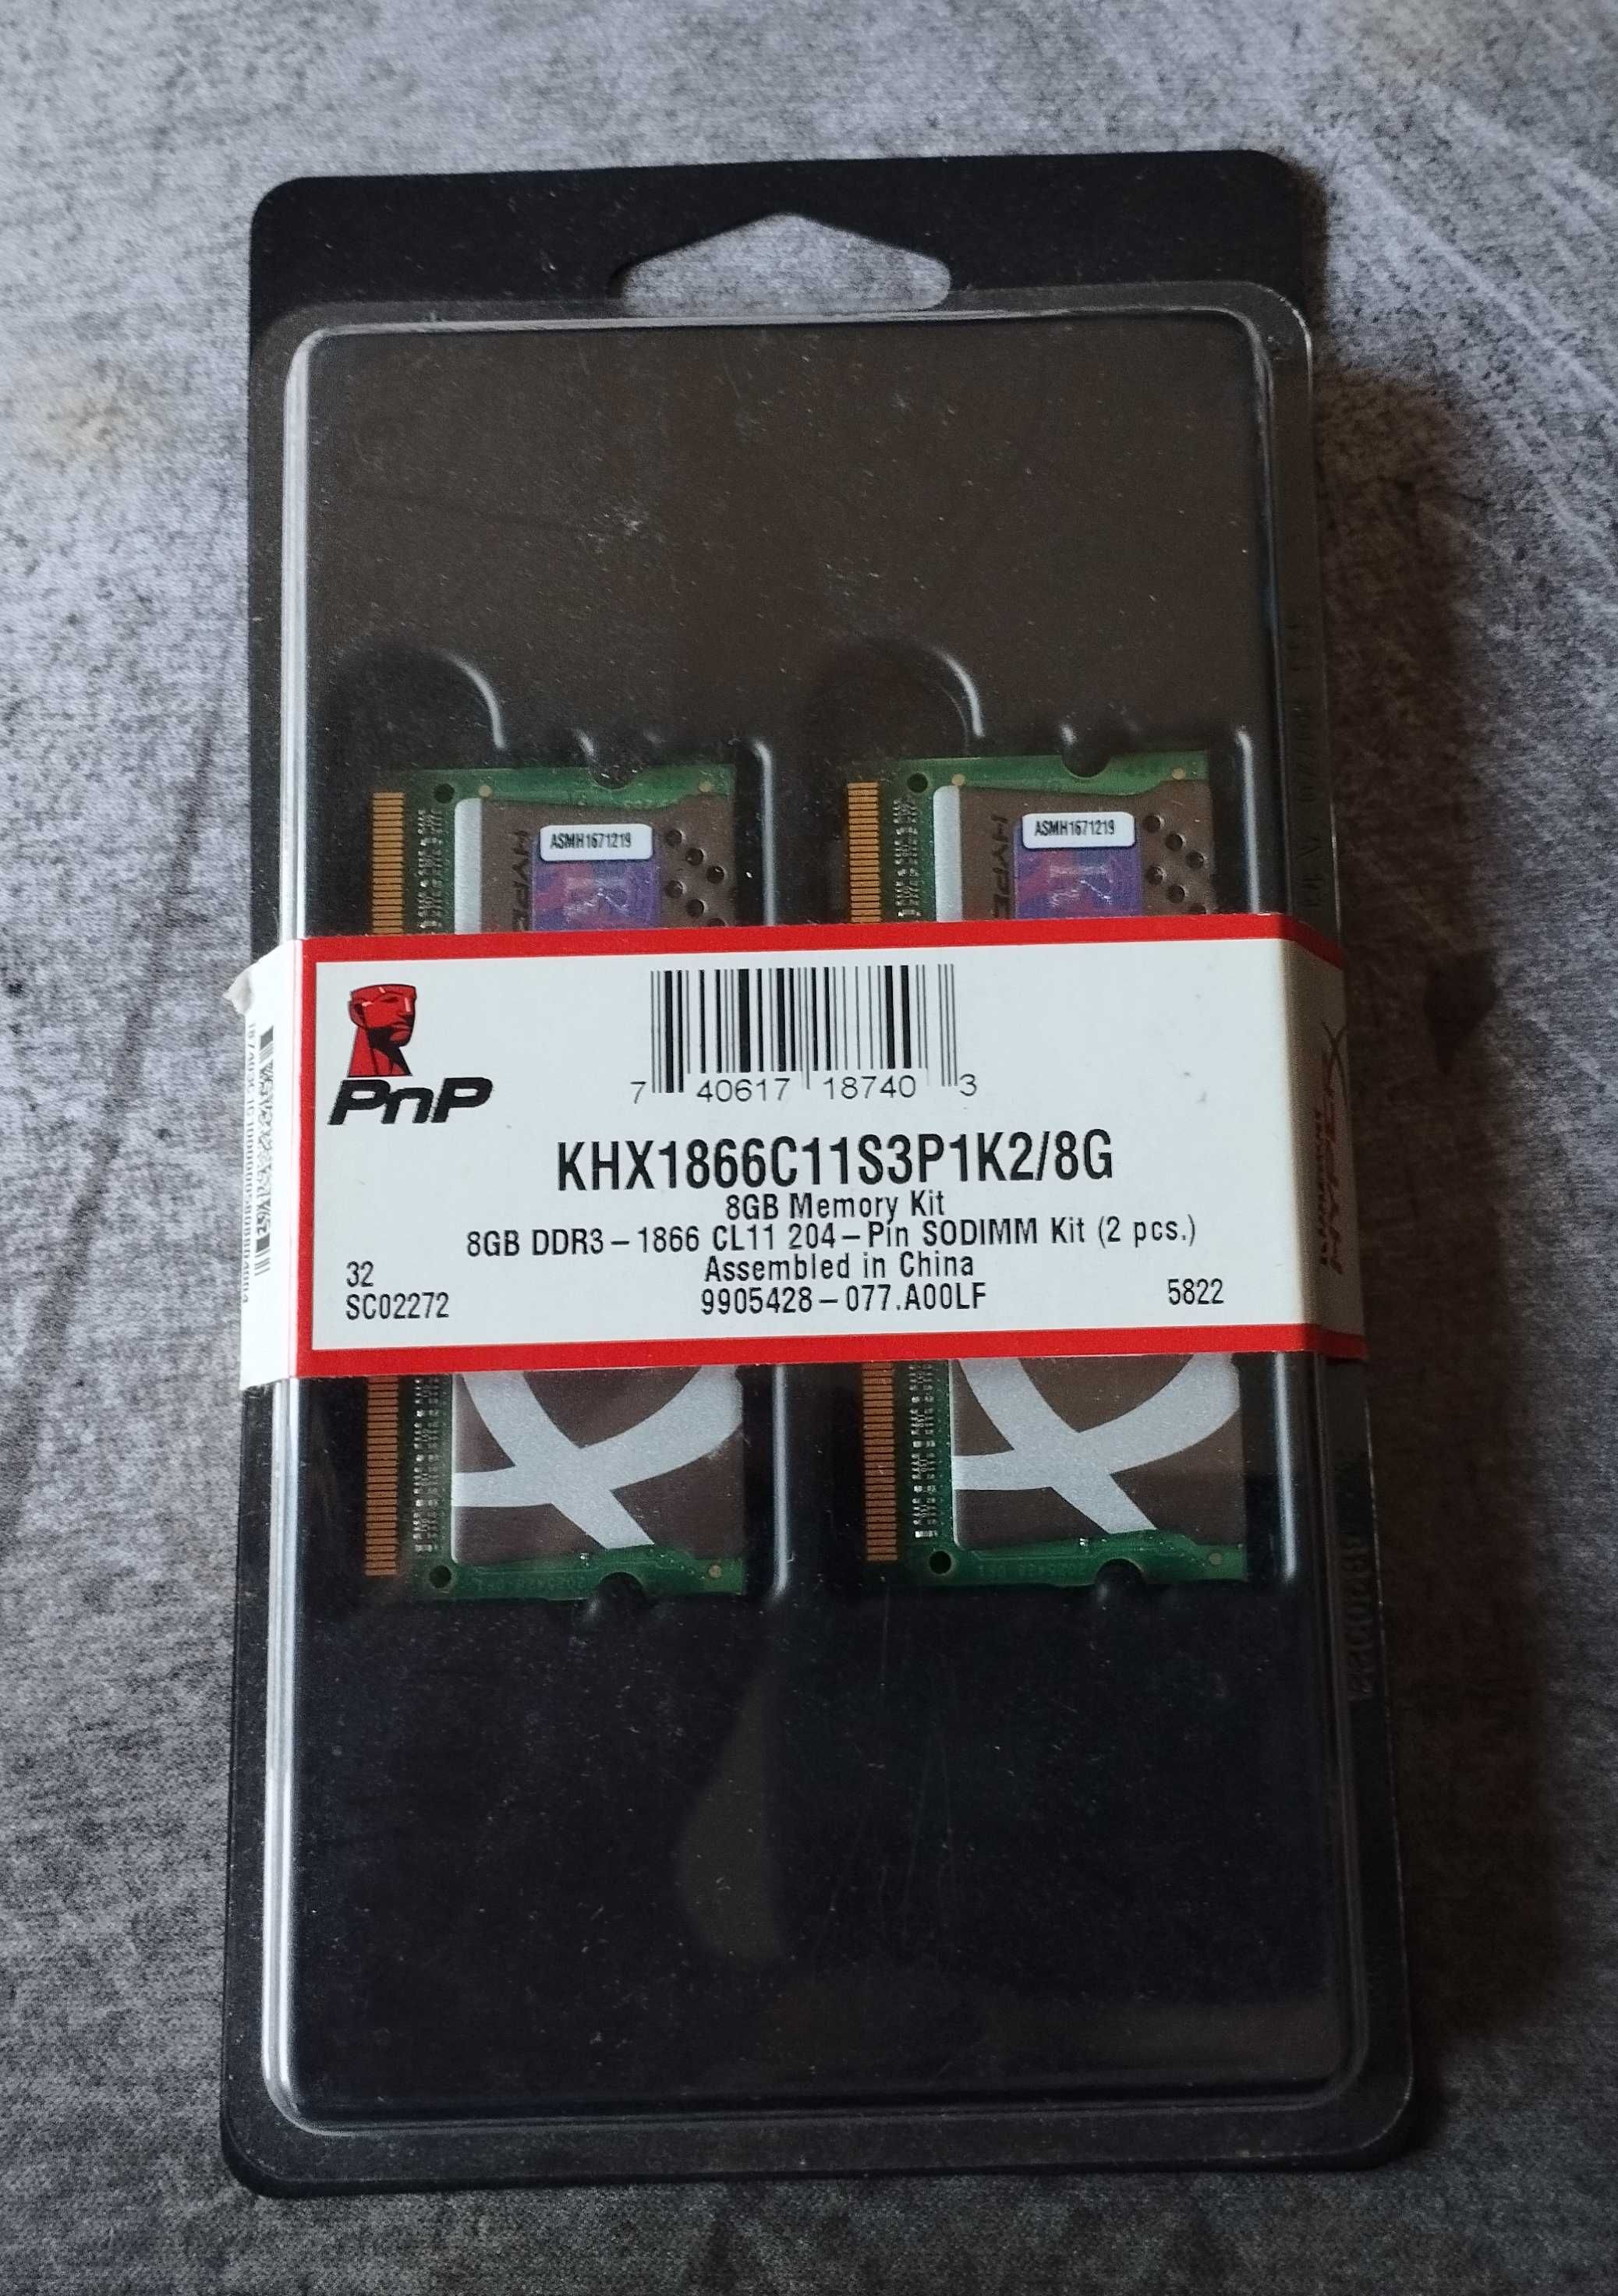 Memórias Kingston HyperX 8GB (2 x 4GB) DDR3-1866MHz para Portáteis